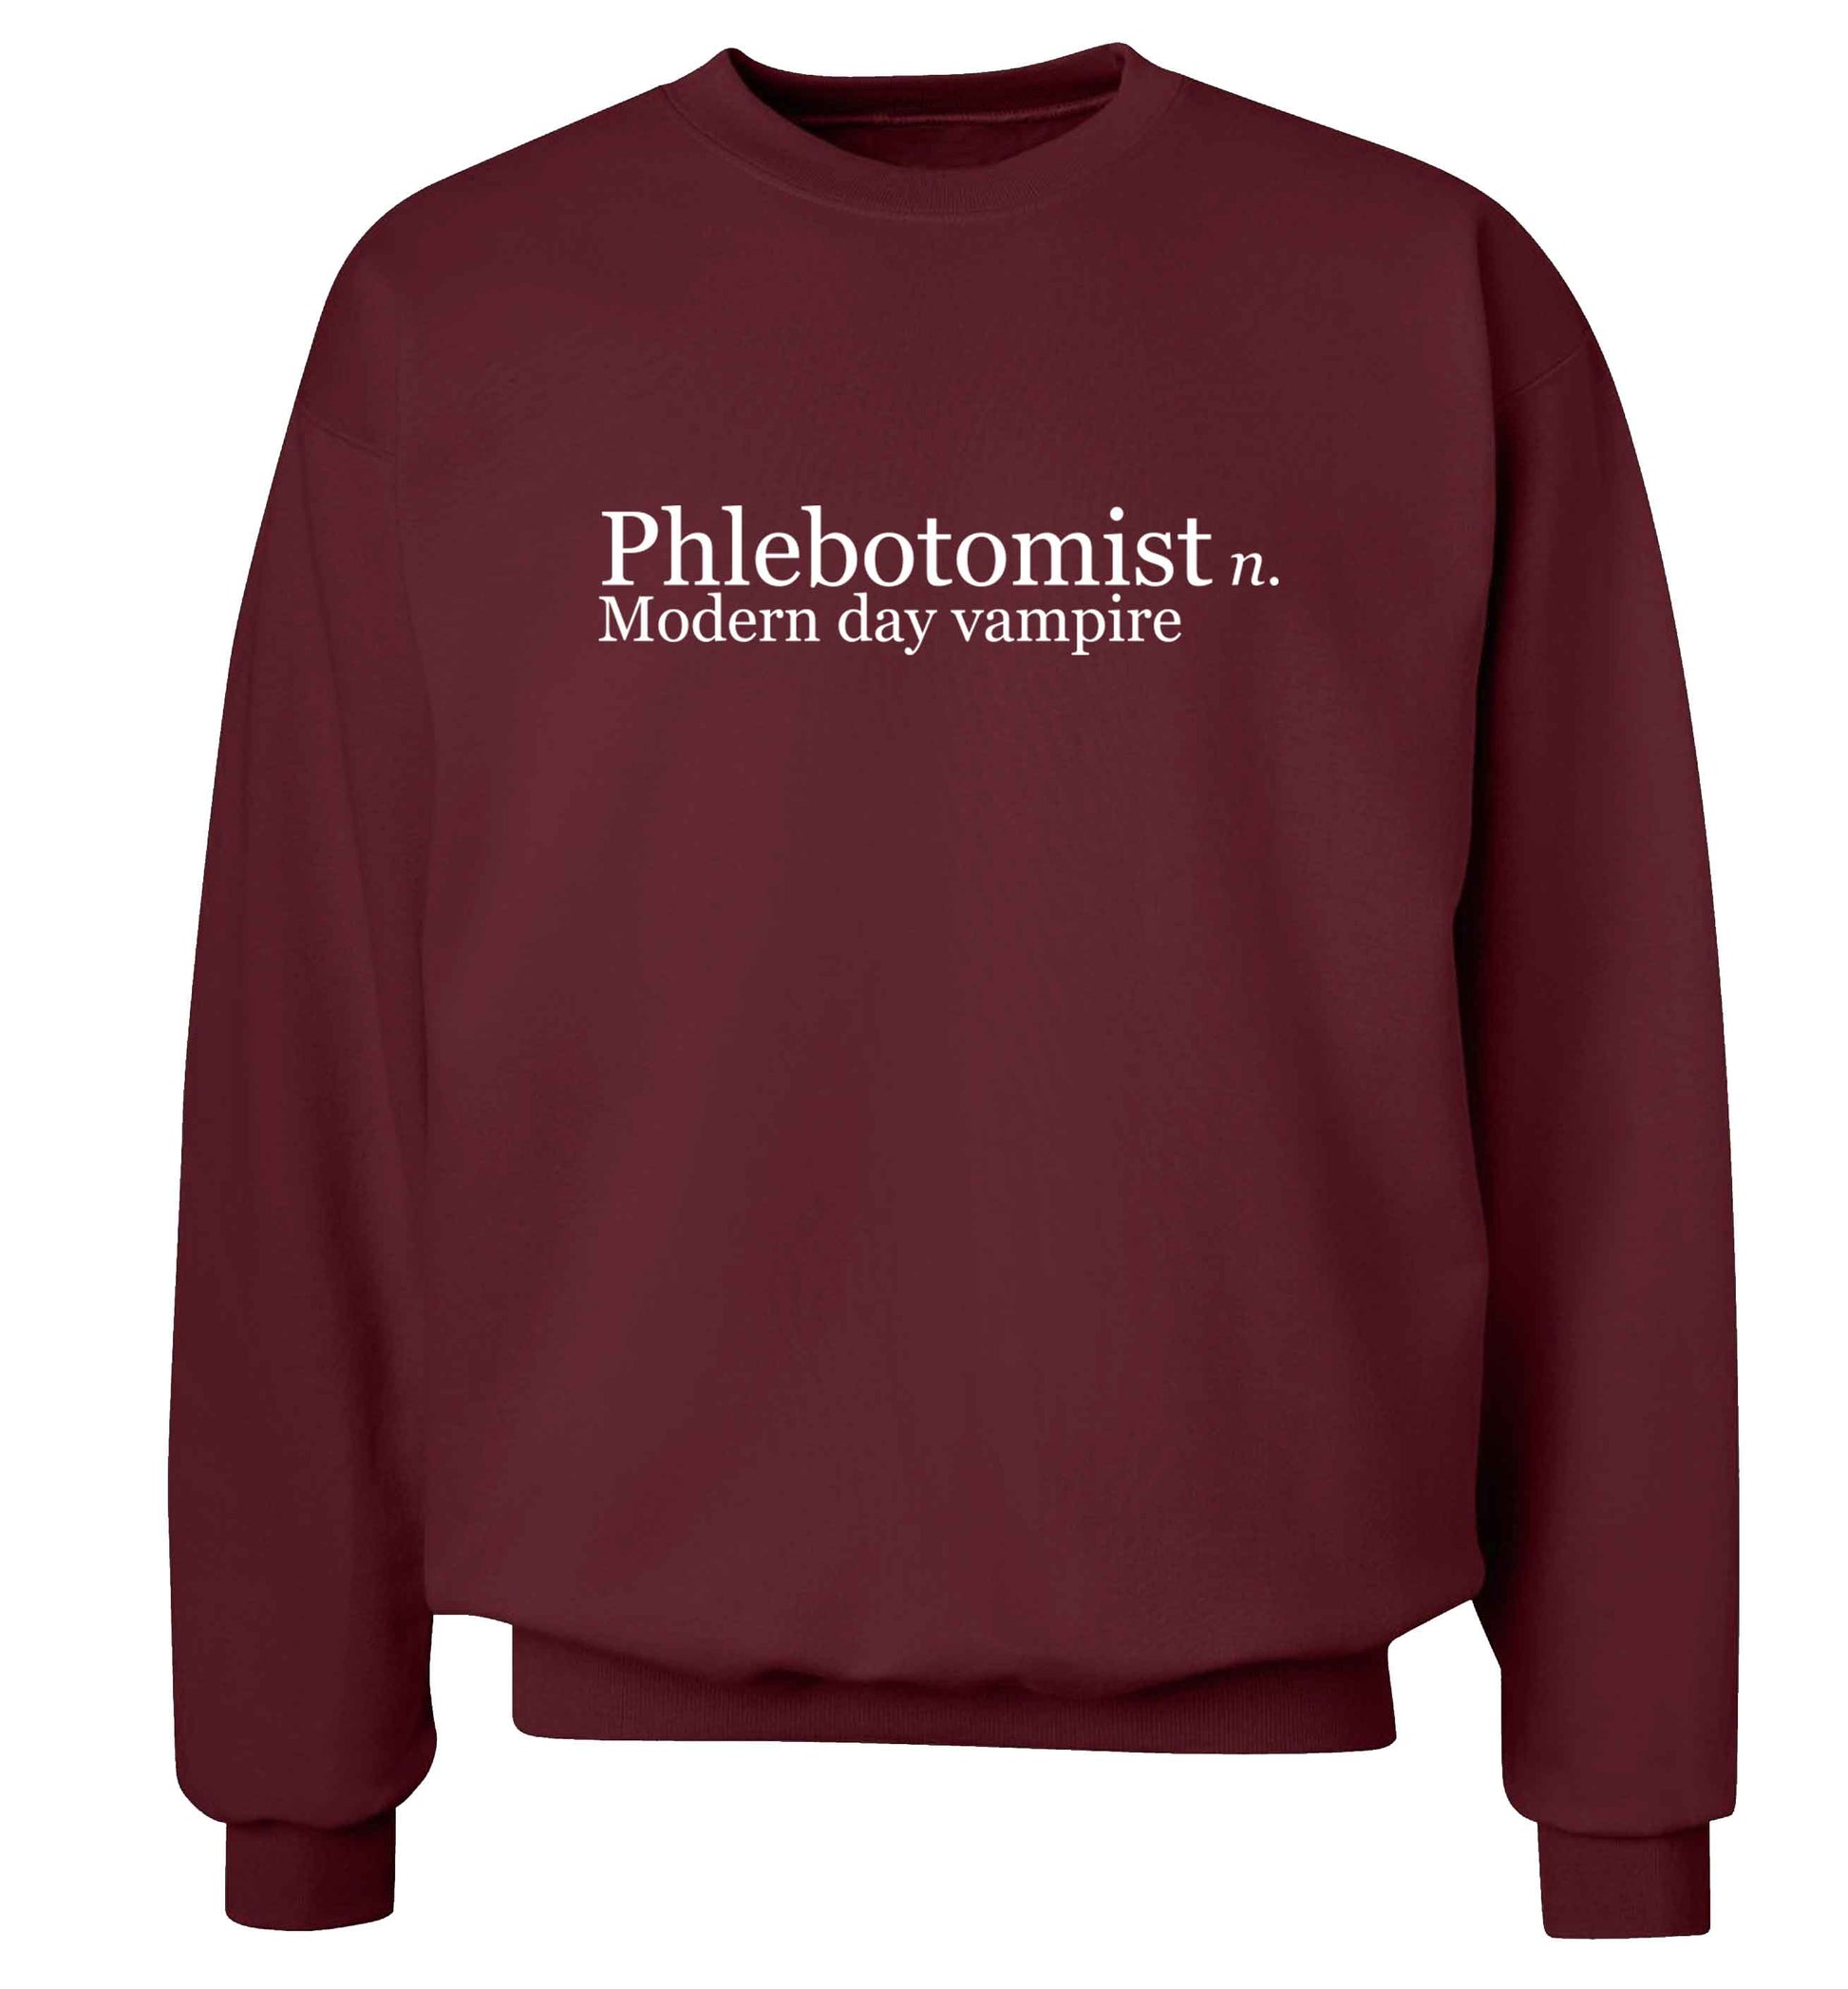 Phlebotomist - Modern day vampire adult's unisex maroon sweater 2XL